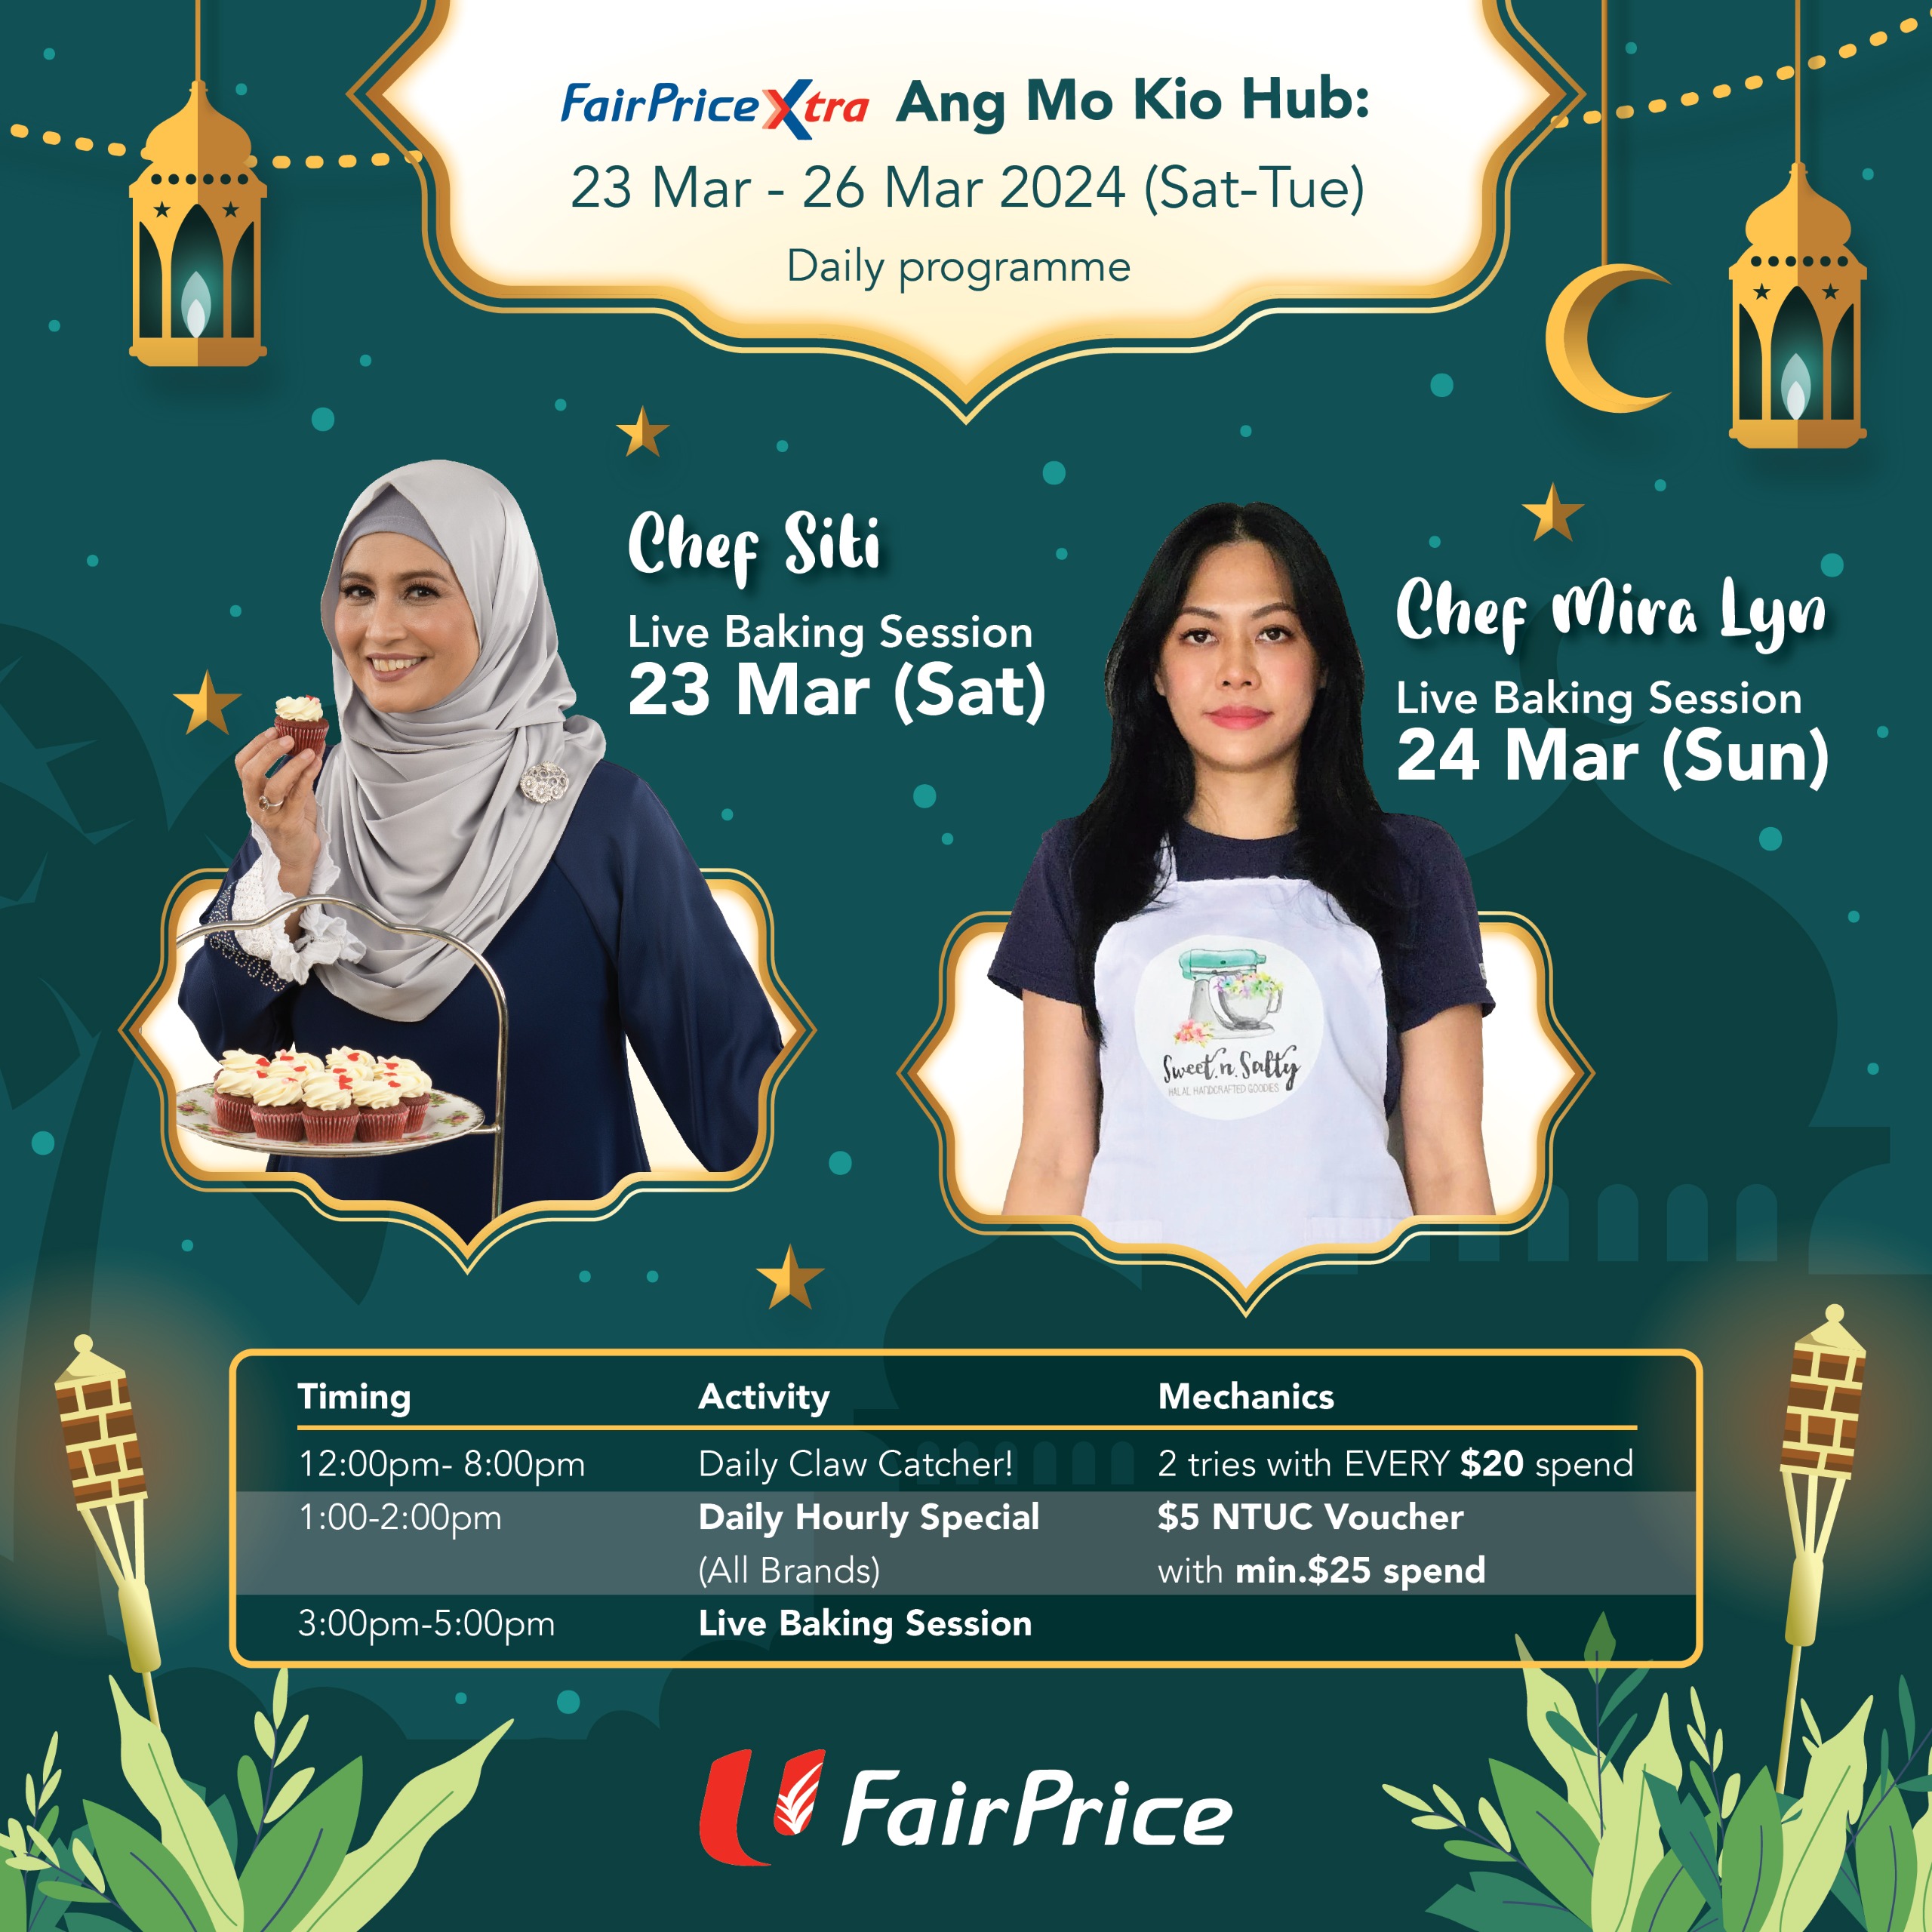 FairPrice Xtra AMK Hub Baking Fair 2024 Chef Siti Chef Mira Lyn